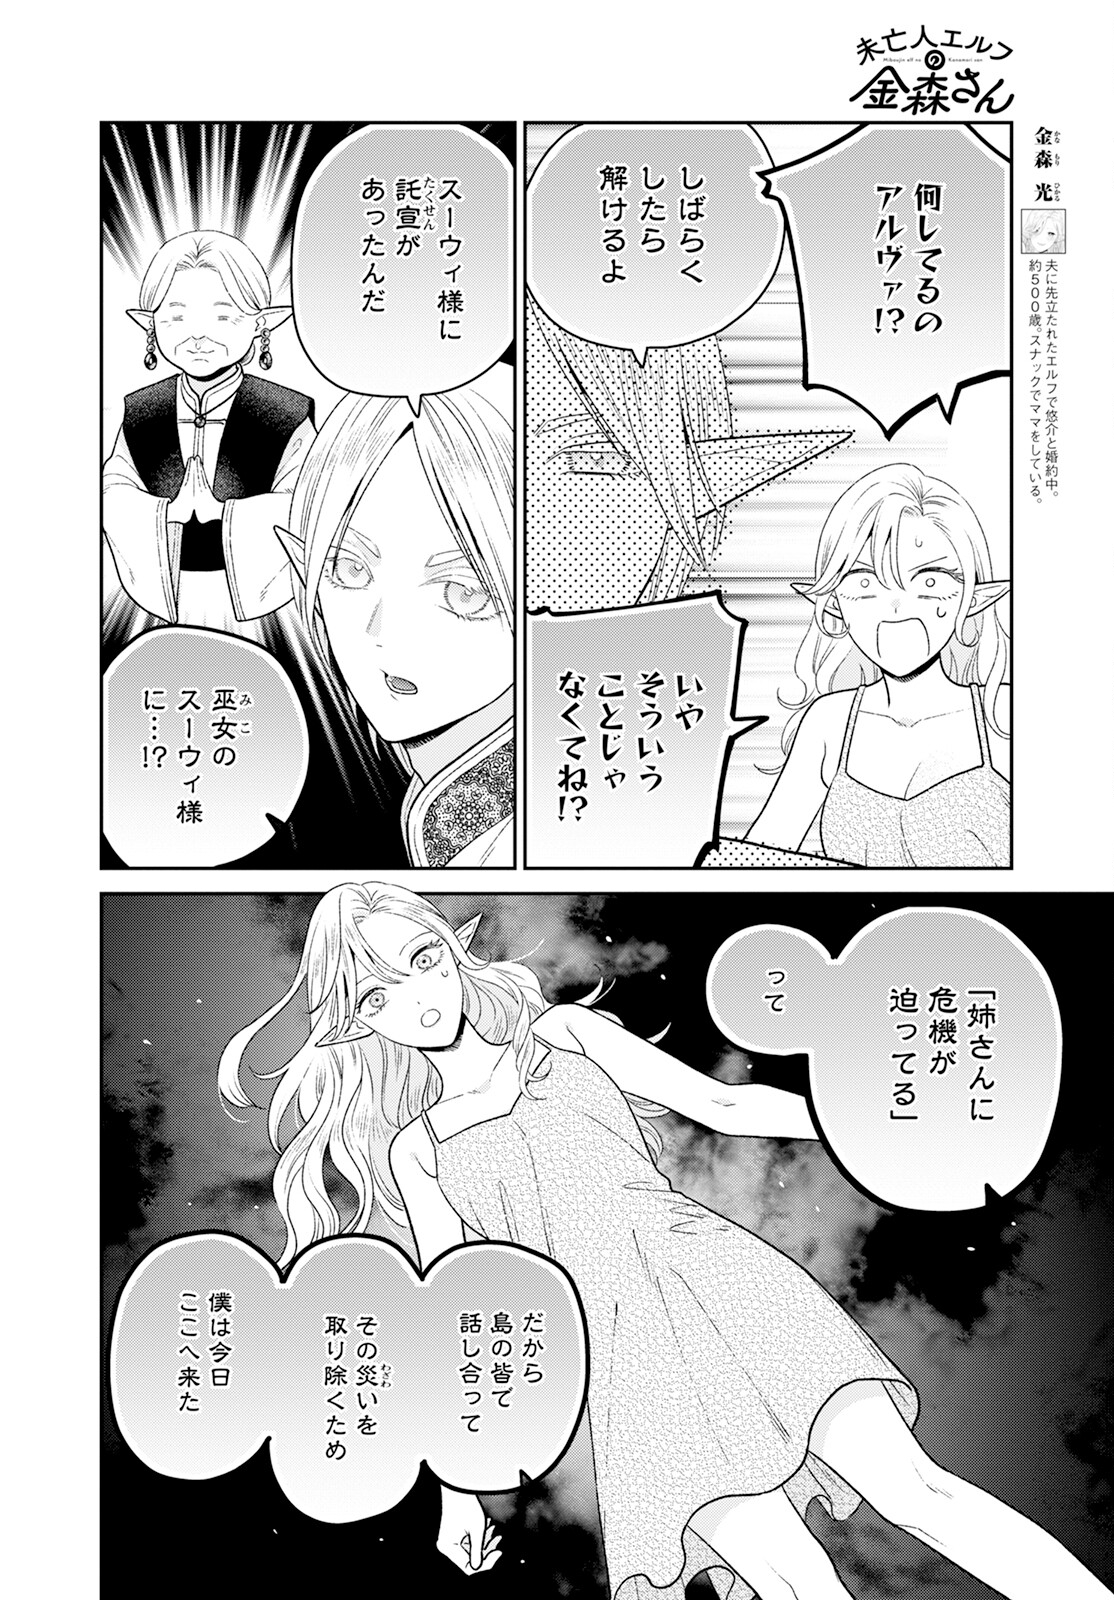 Miboujin Elf no Kanamori-san - Chapter 8 - Page 6